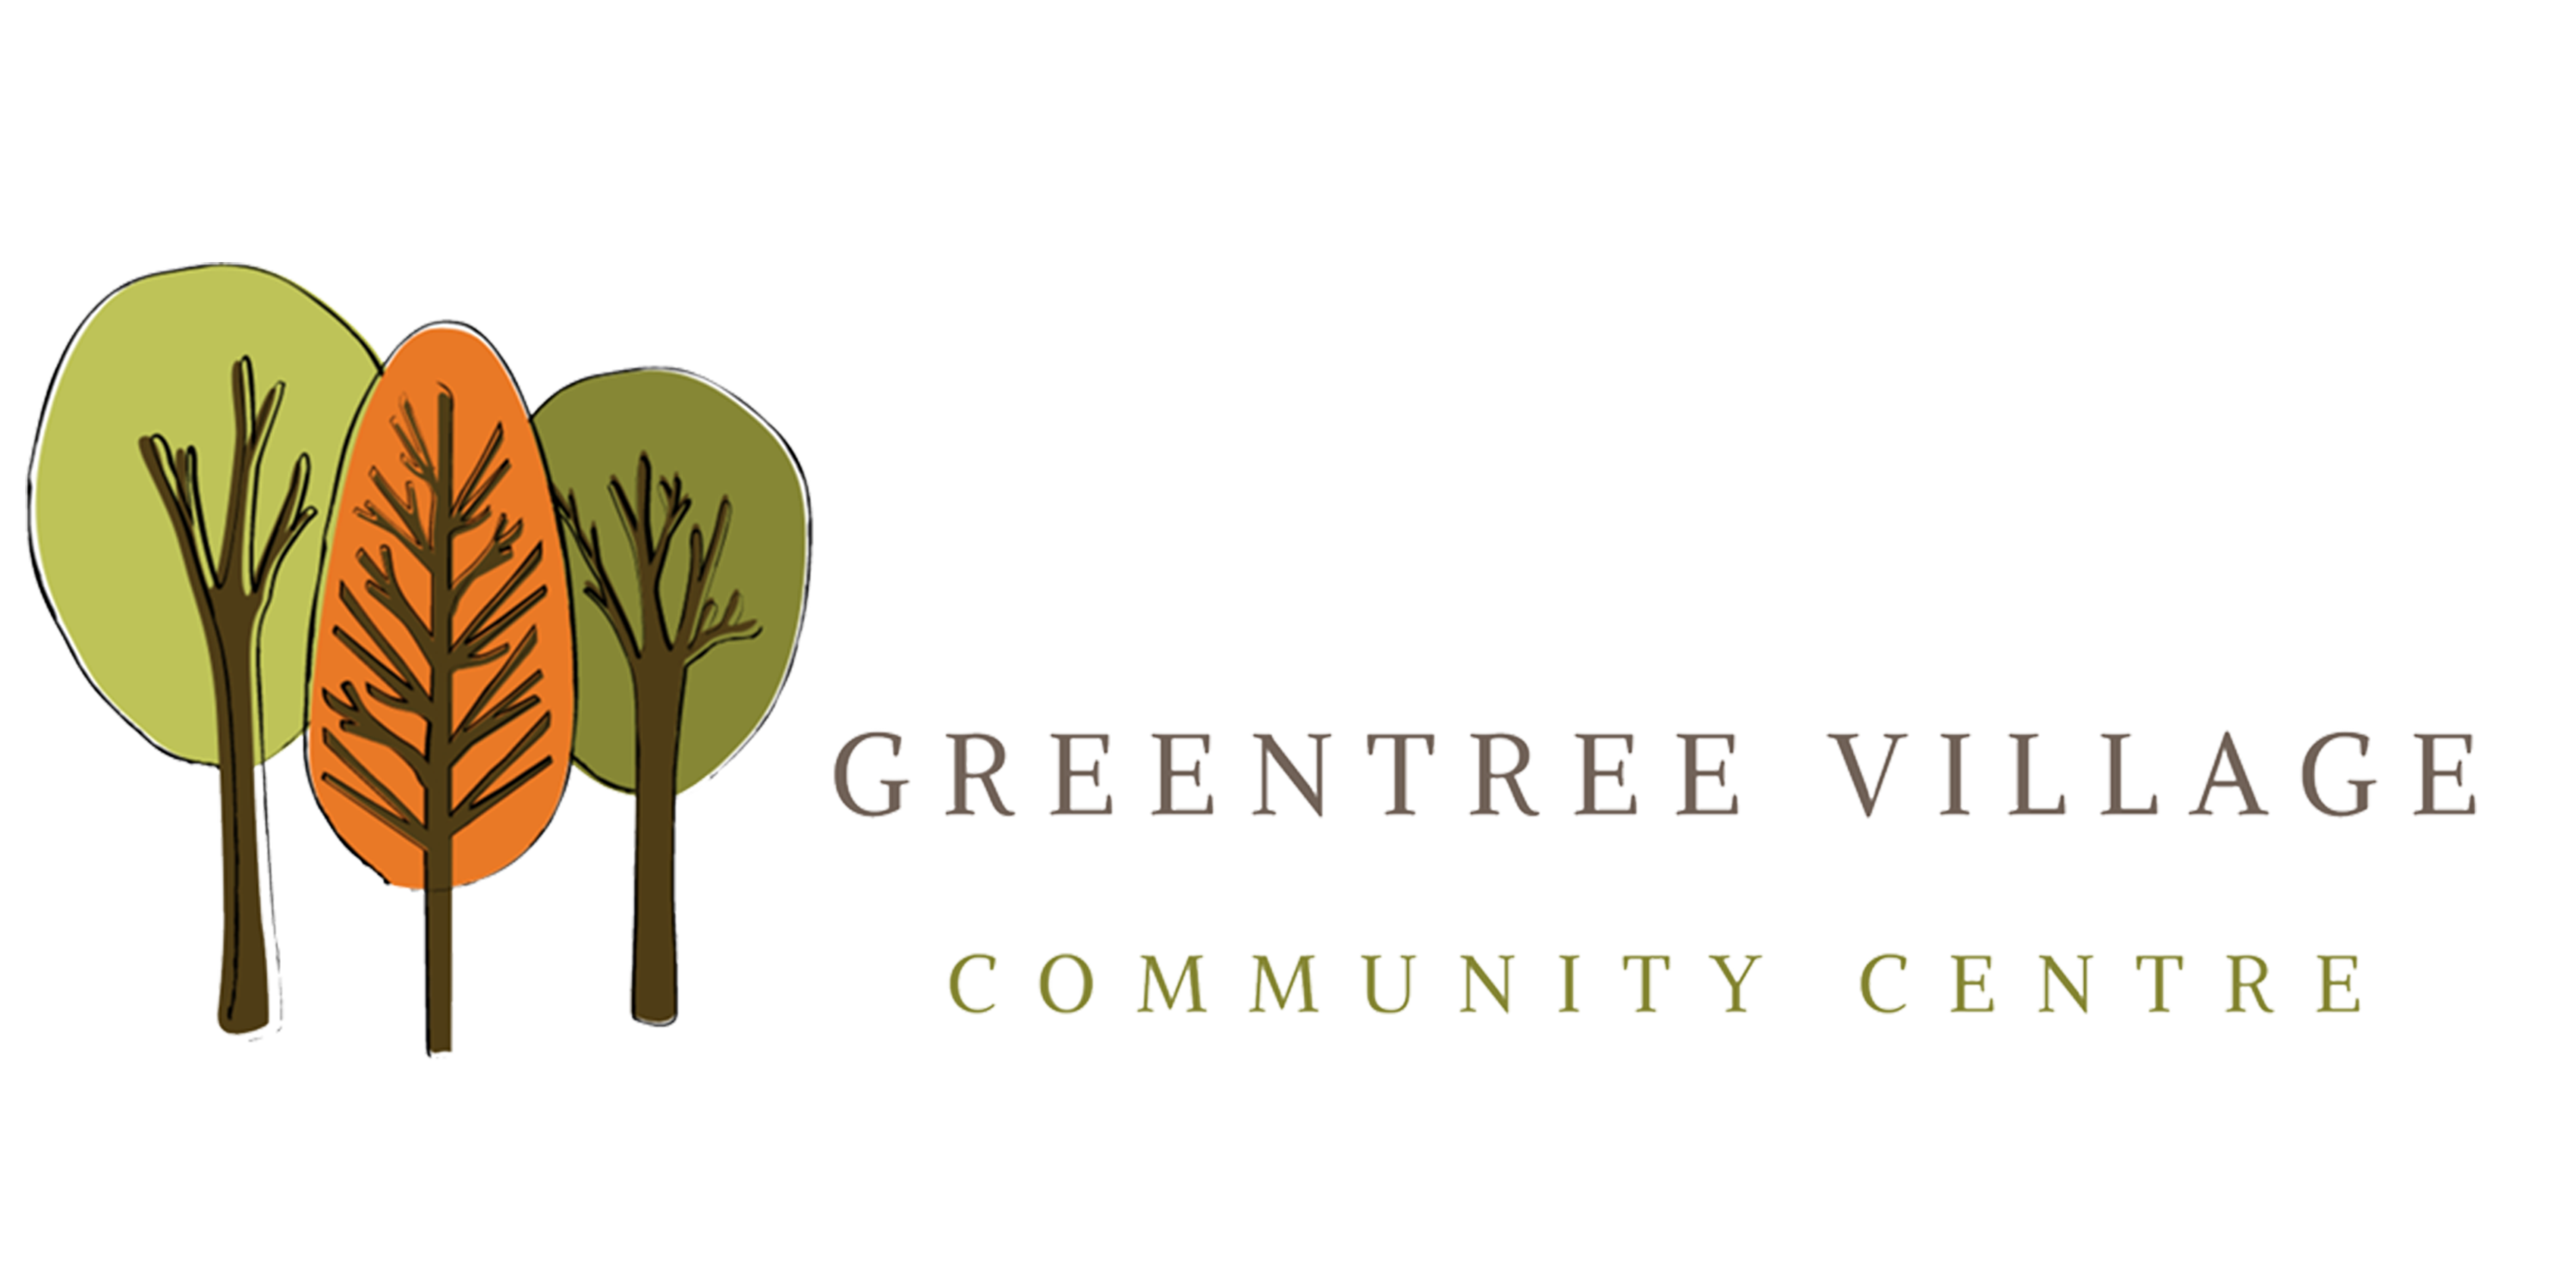 Greentree Village Community Centre